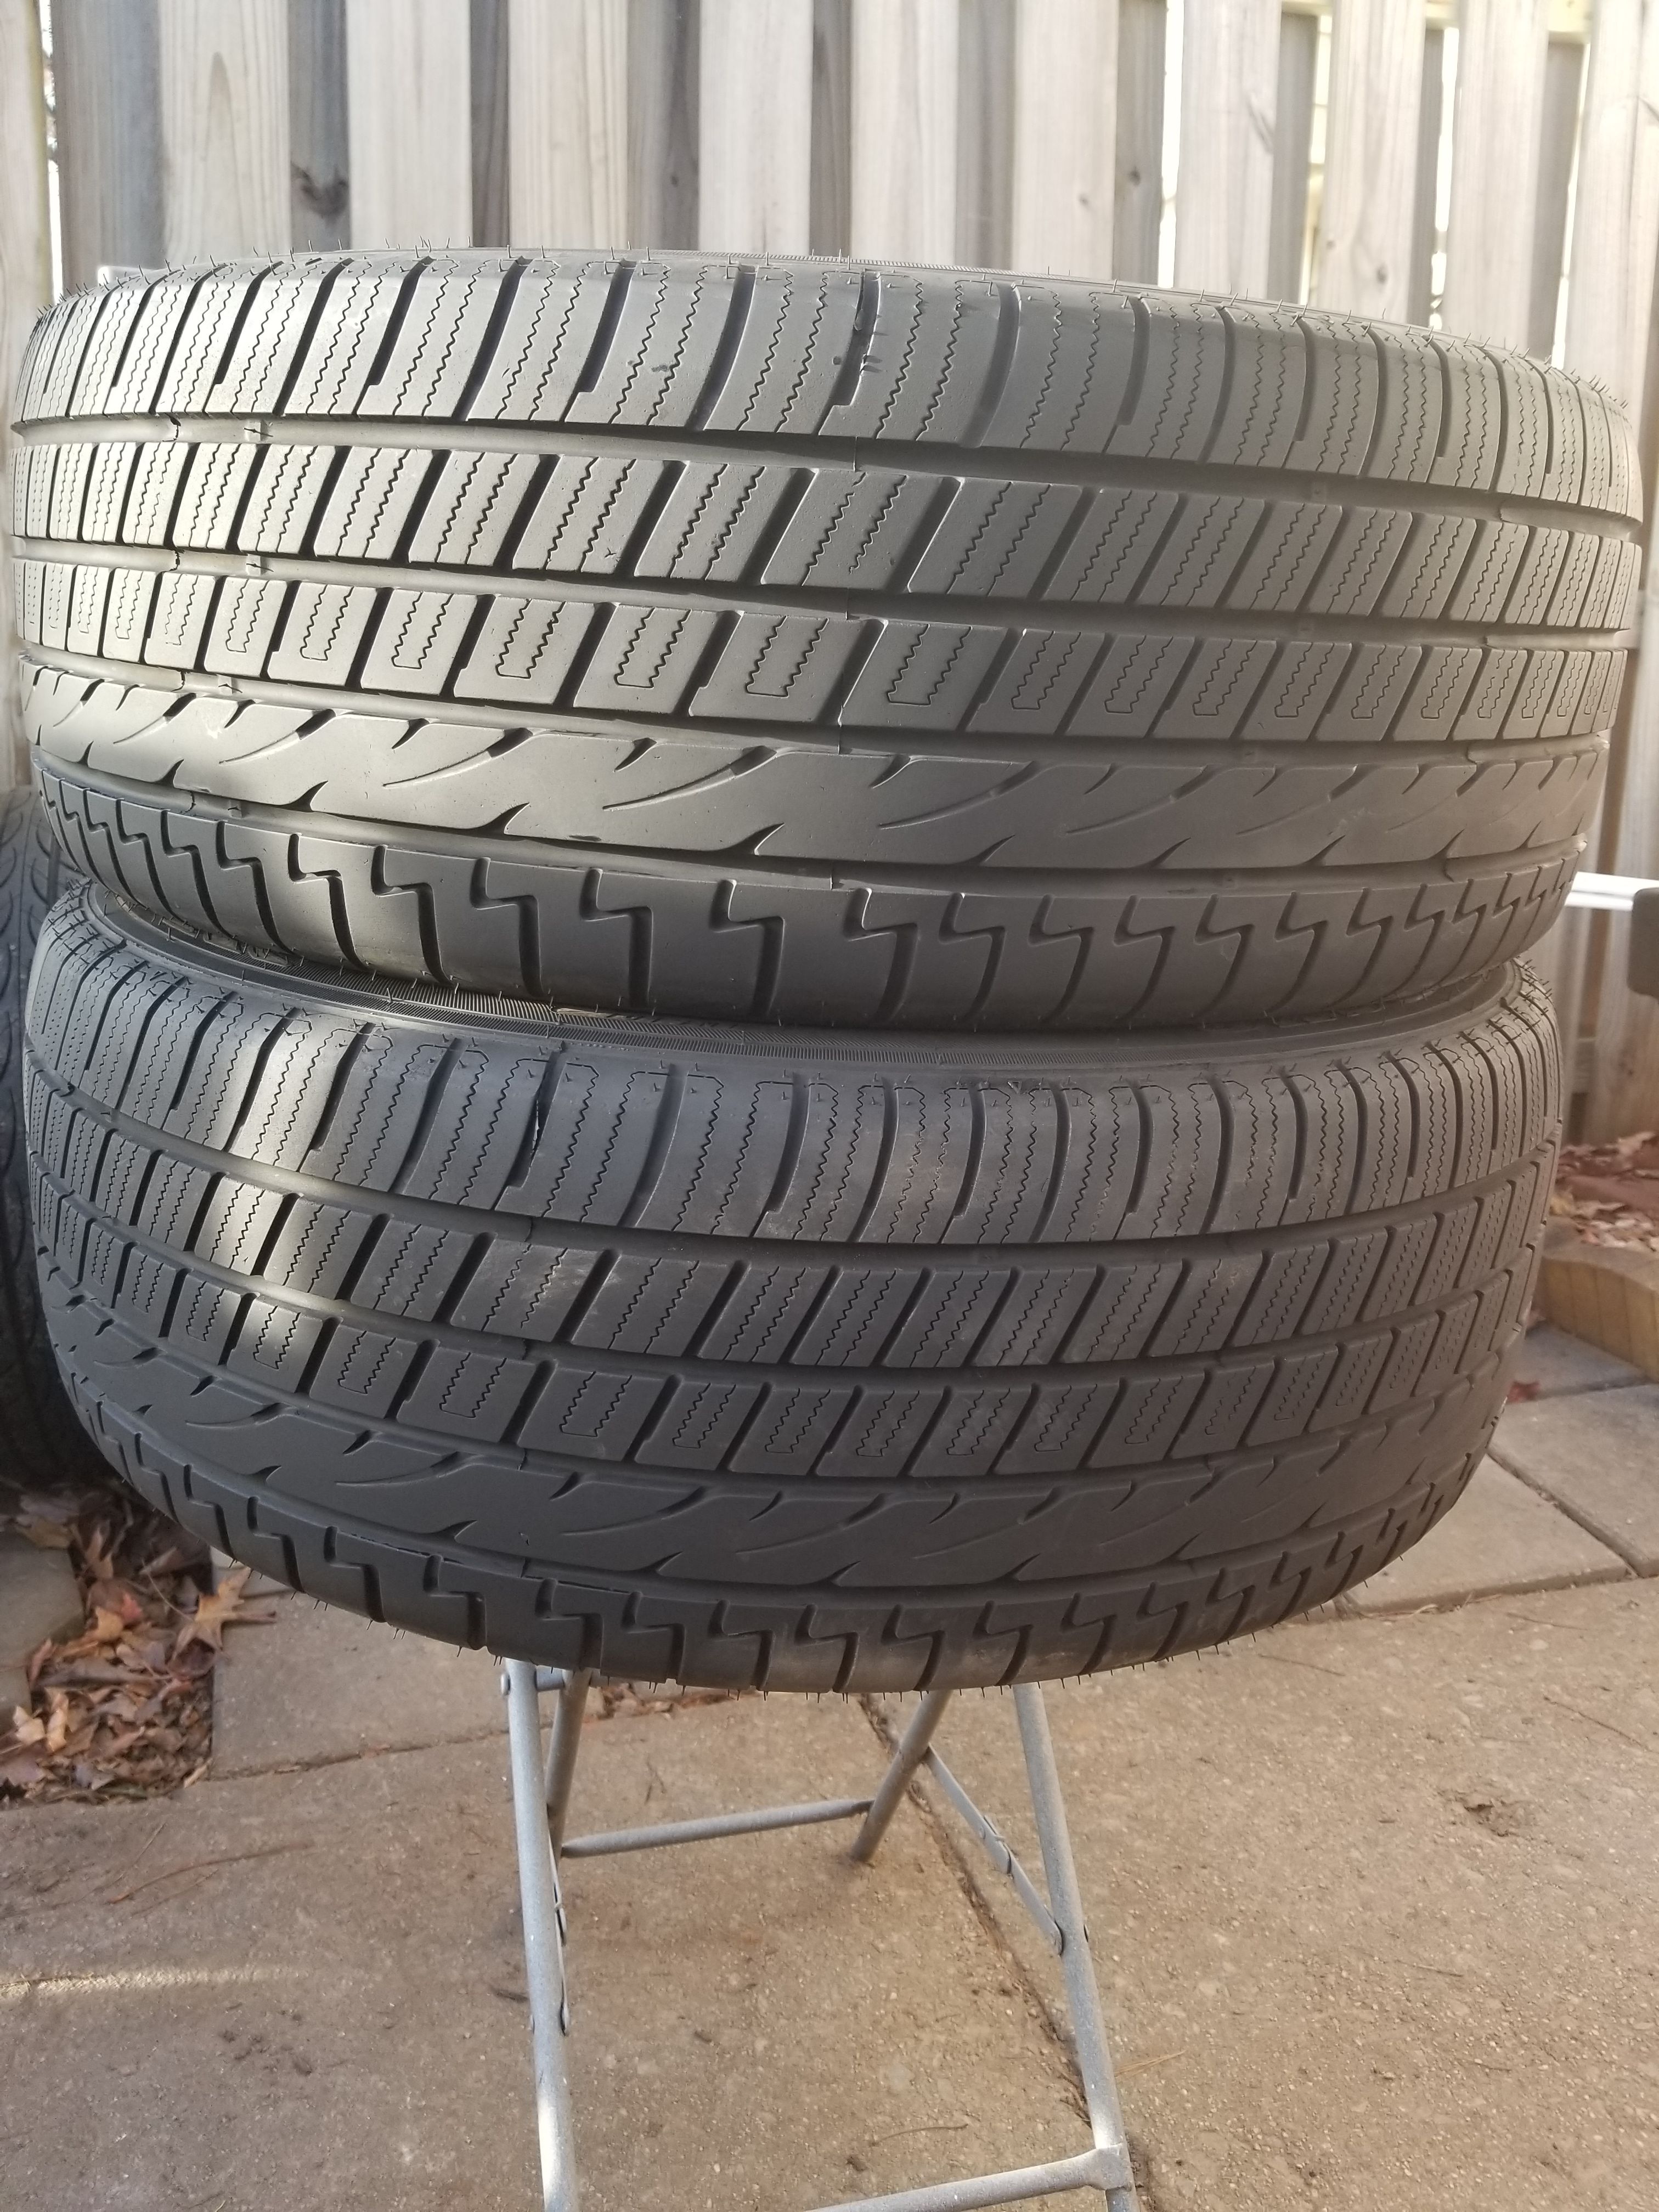 235/55/18 tires